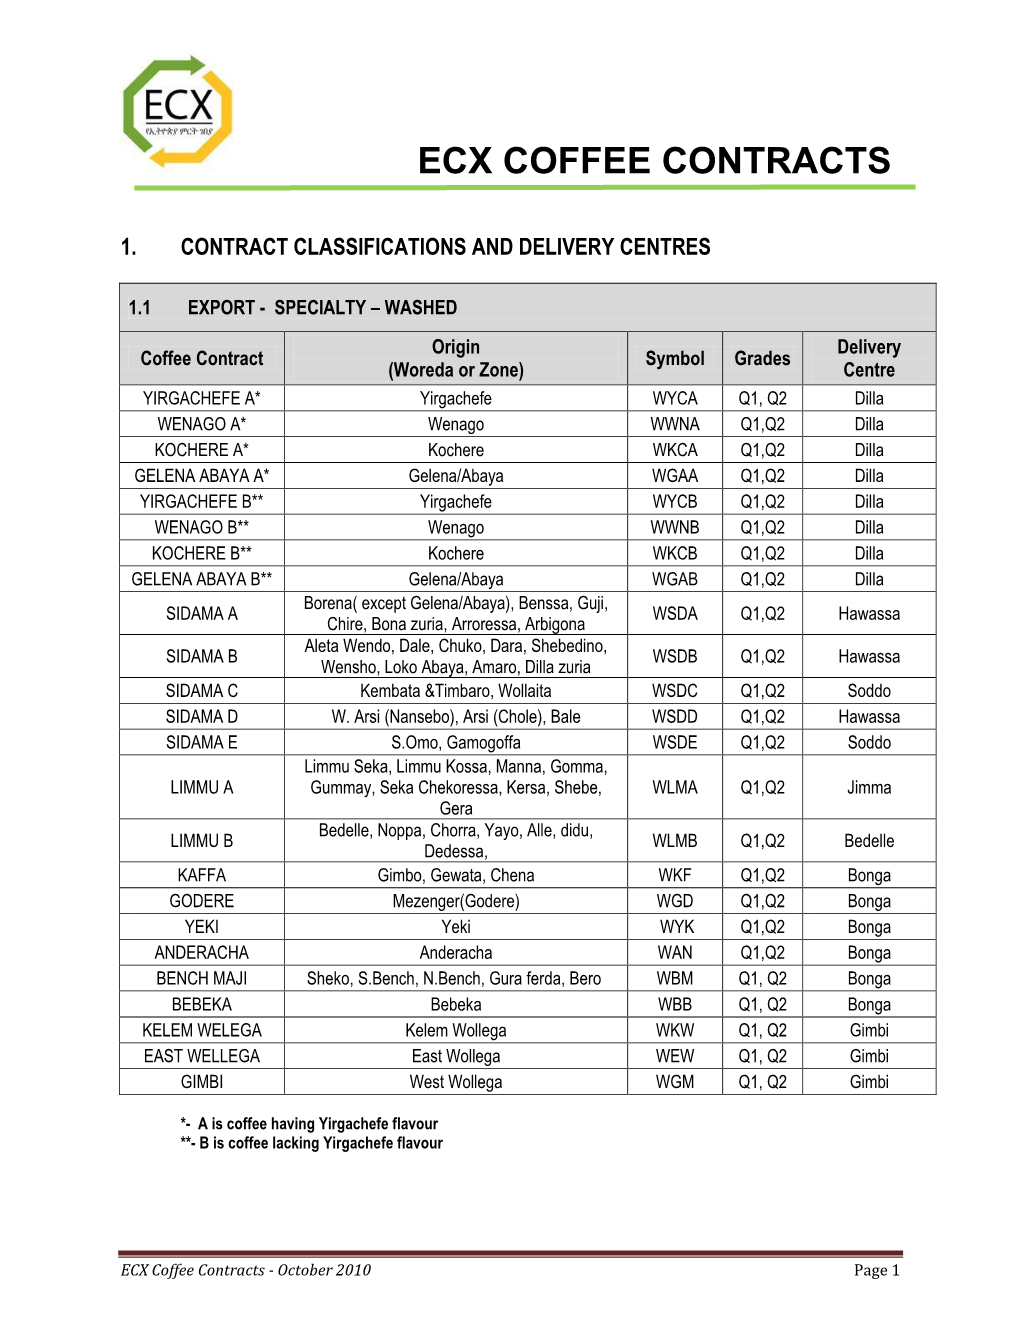 Ecx Coffee Contracts